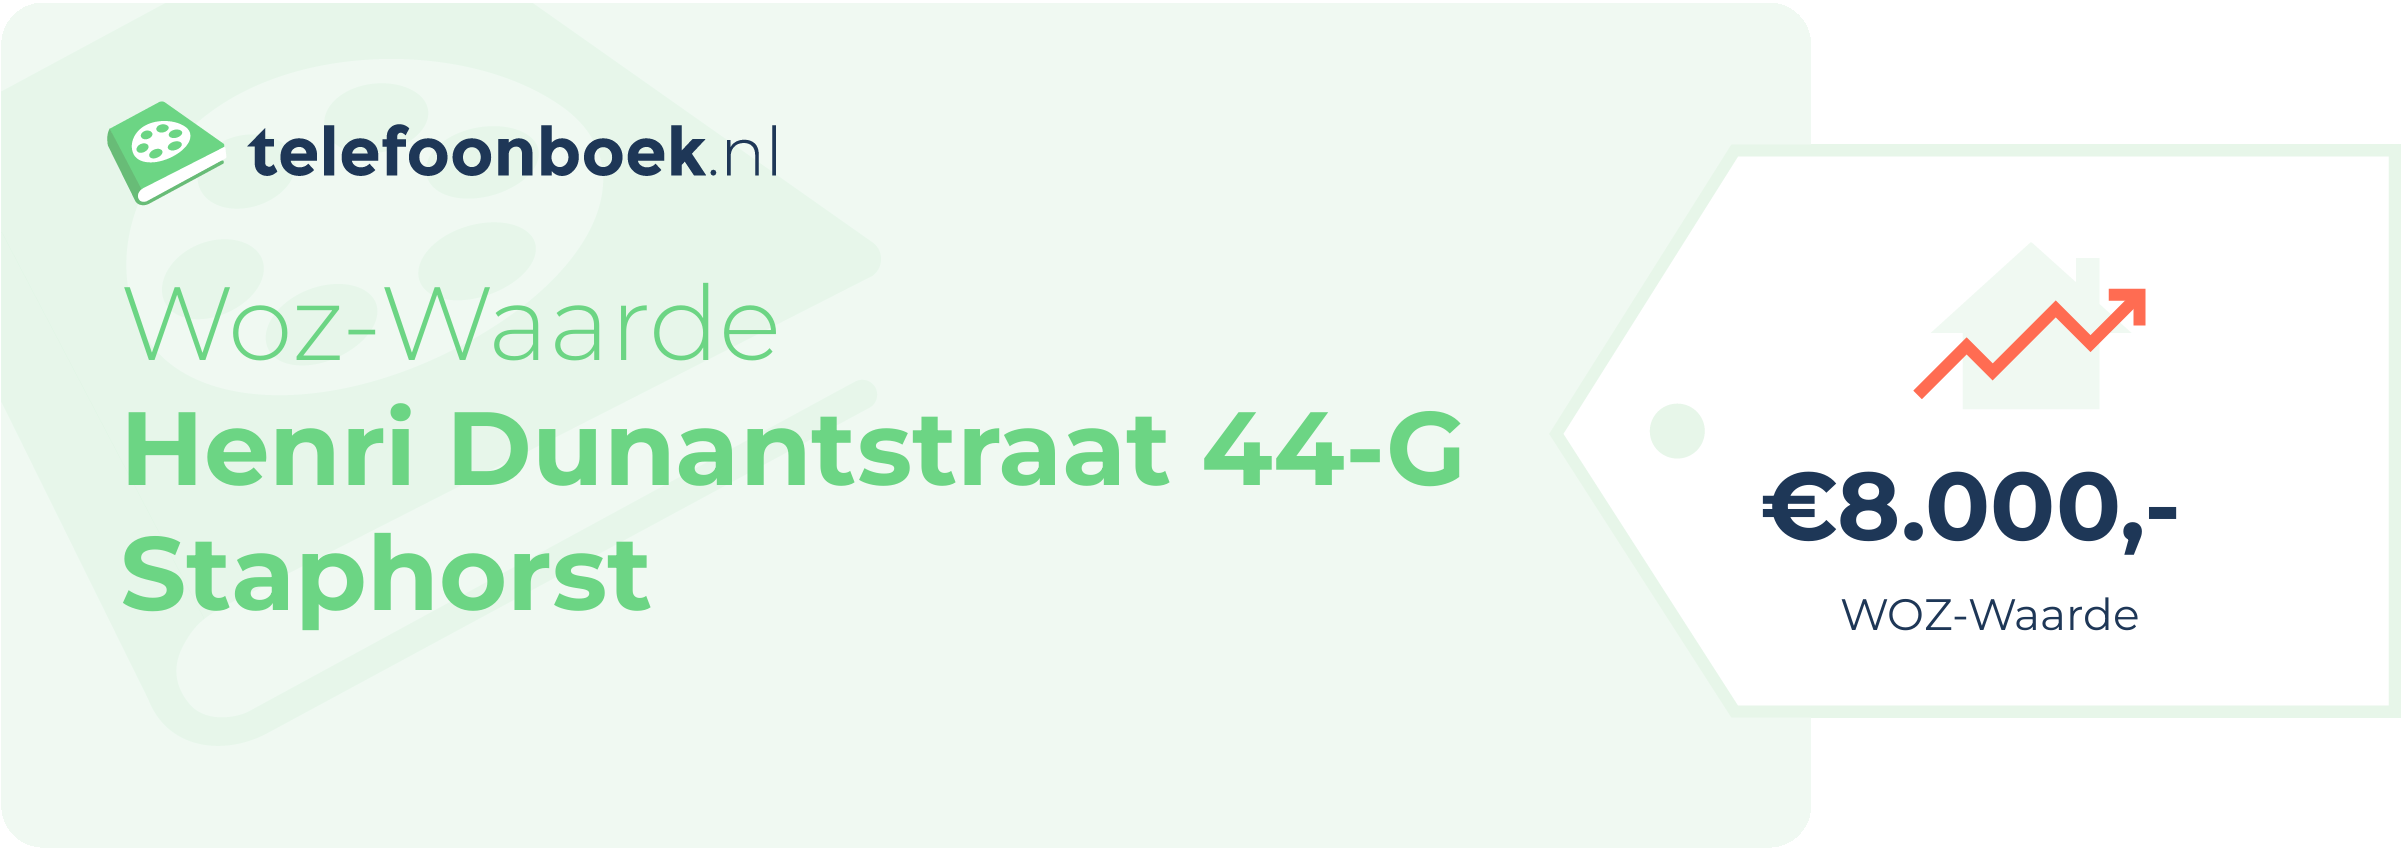 WOZ-waarde Henri Dunantstraat 44-G Staphorst